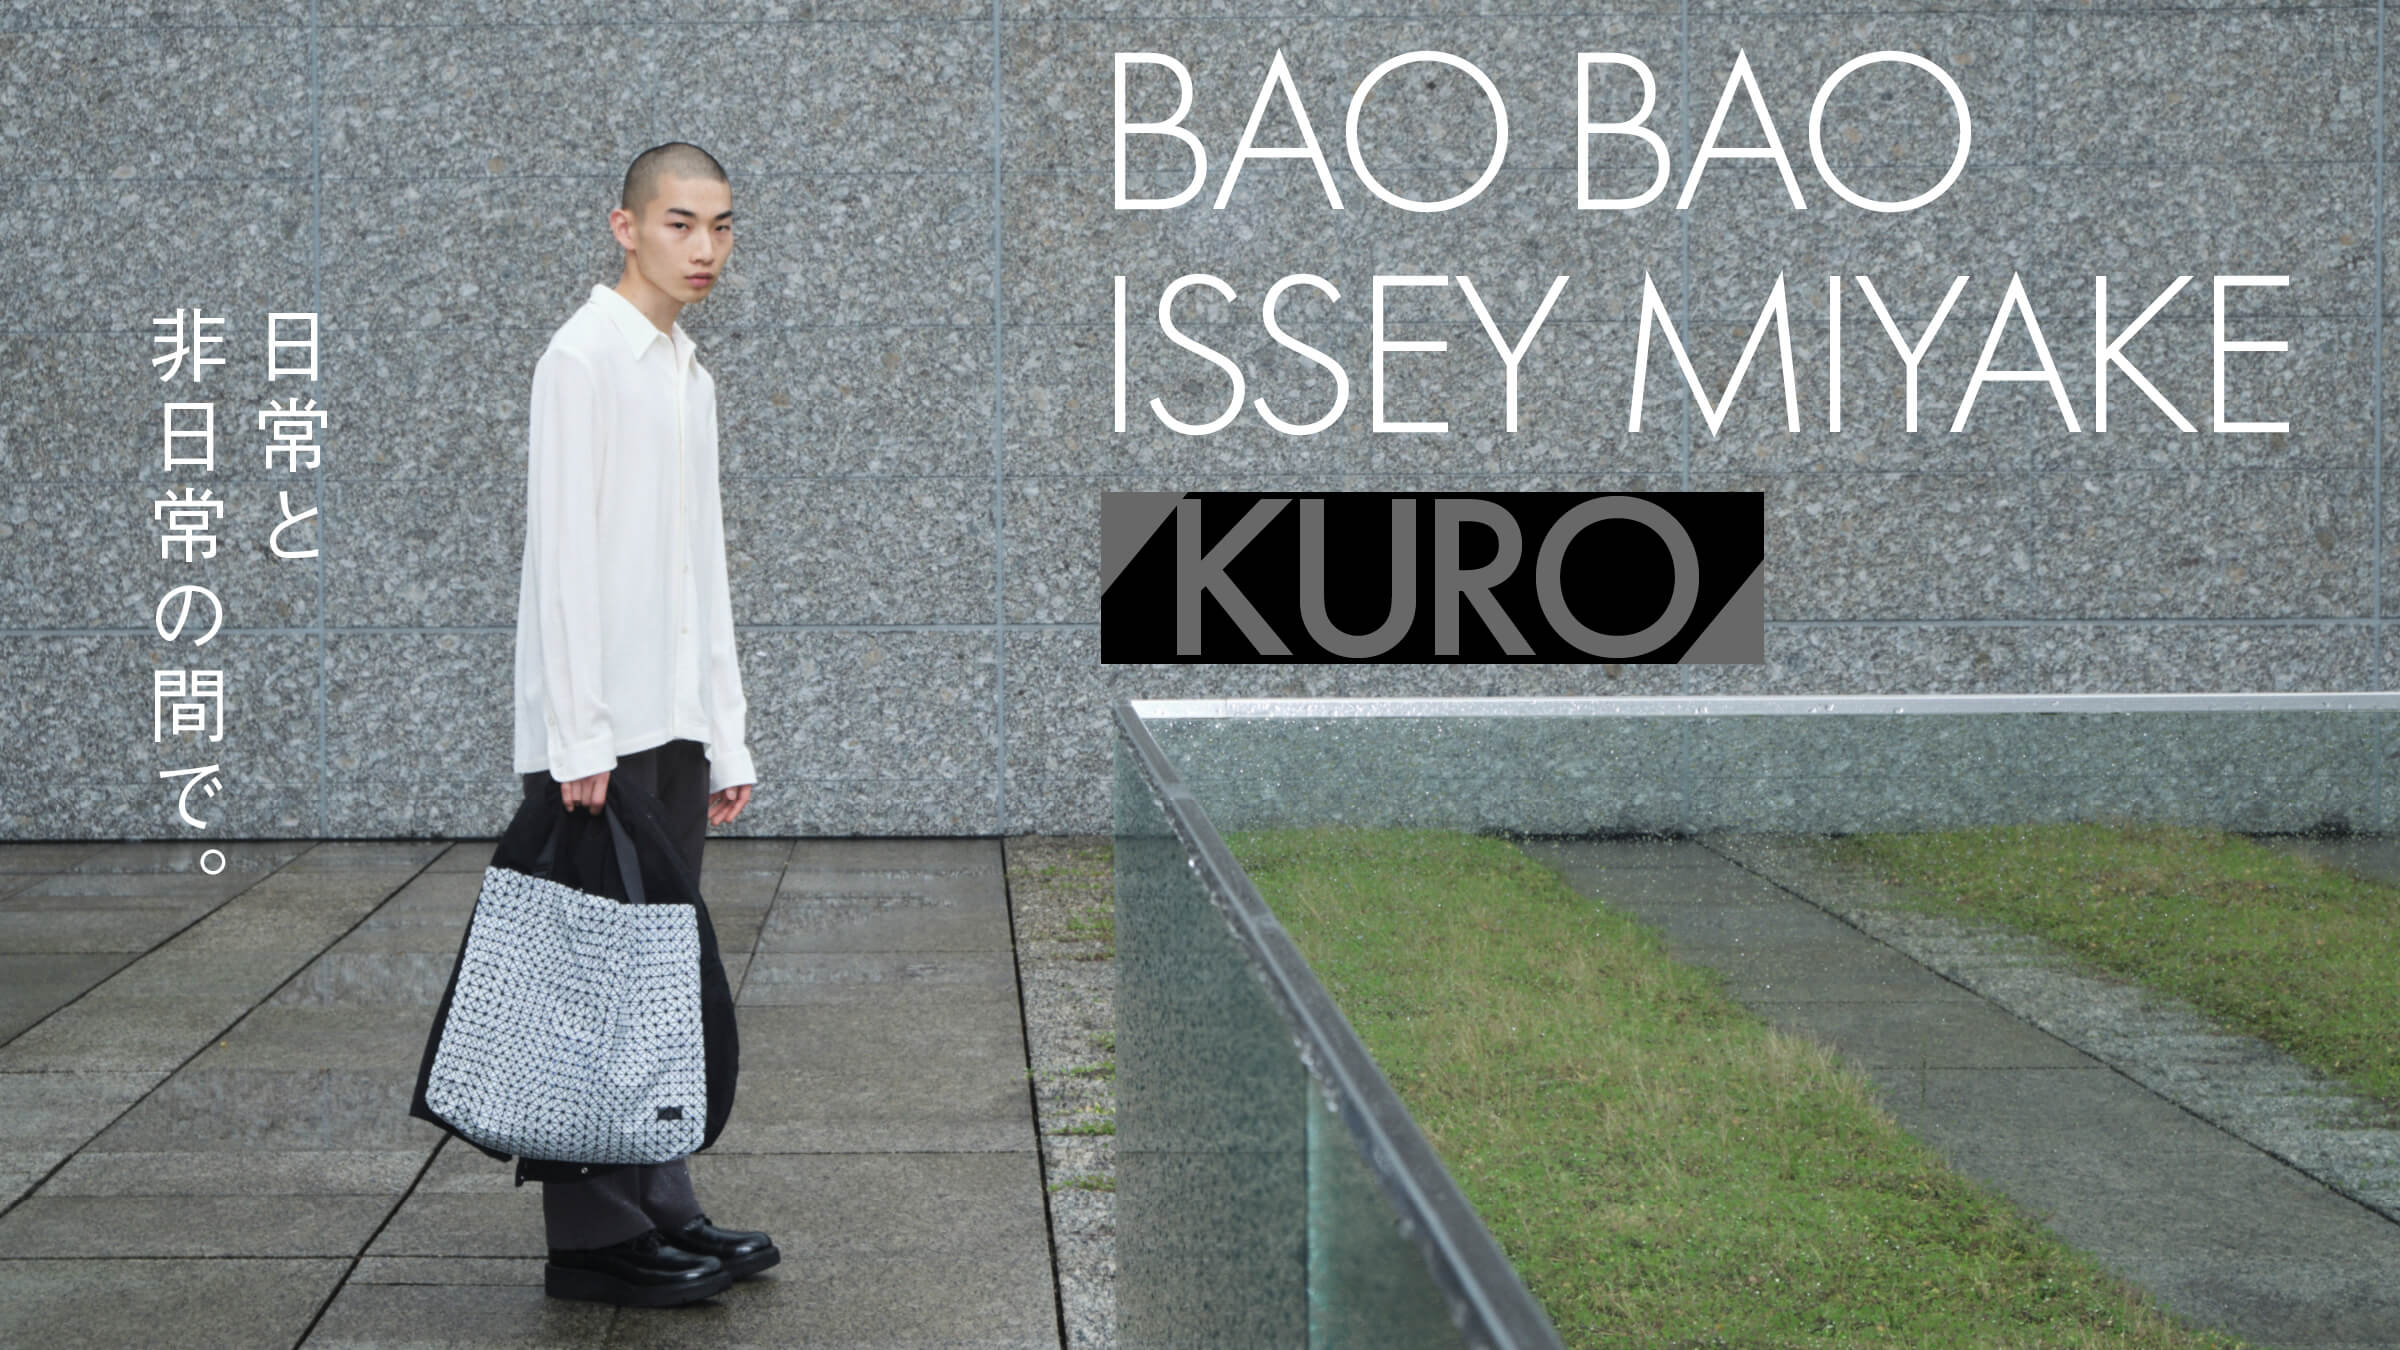 BAO BAO ISSEY MIYAKE "KURO" between the everyday and the extraordinary.